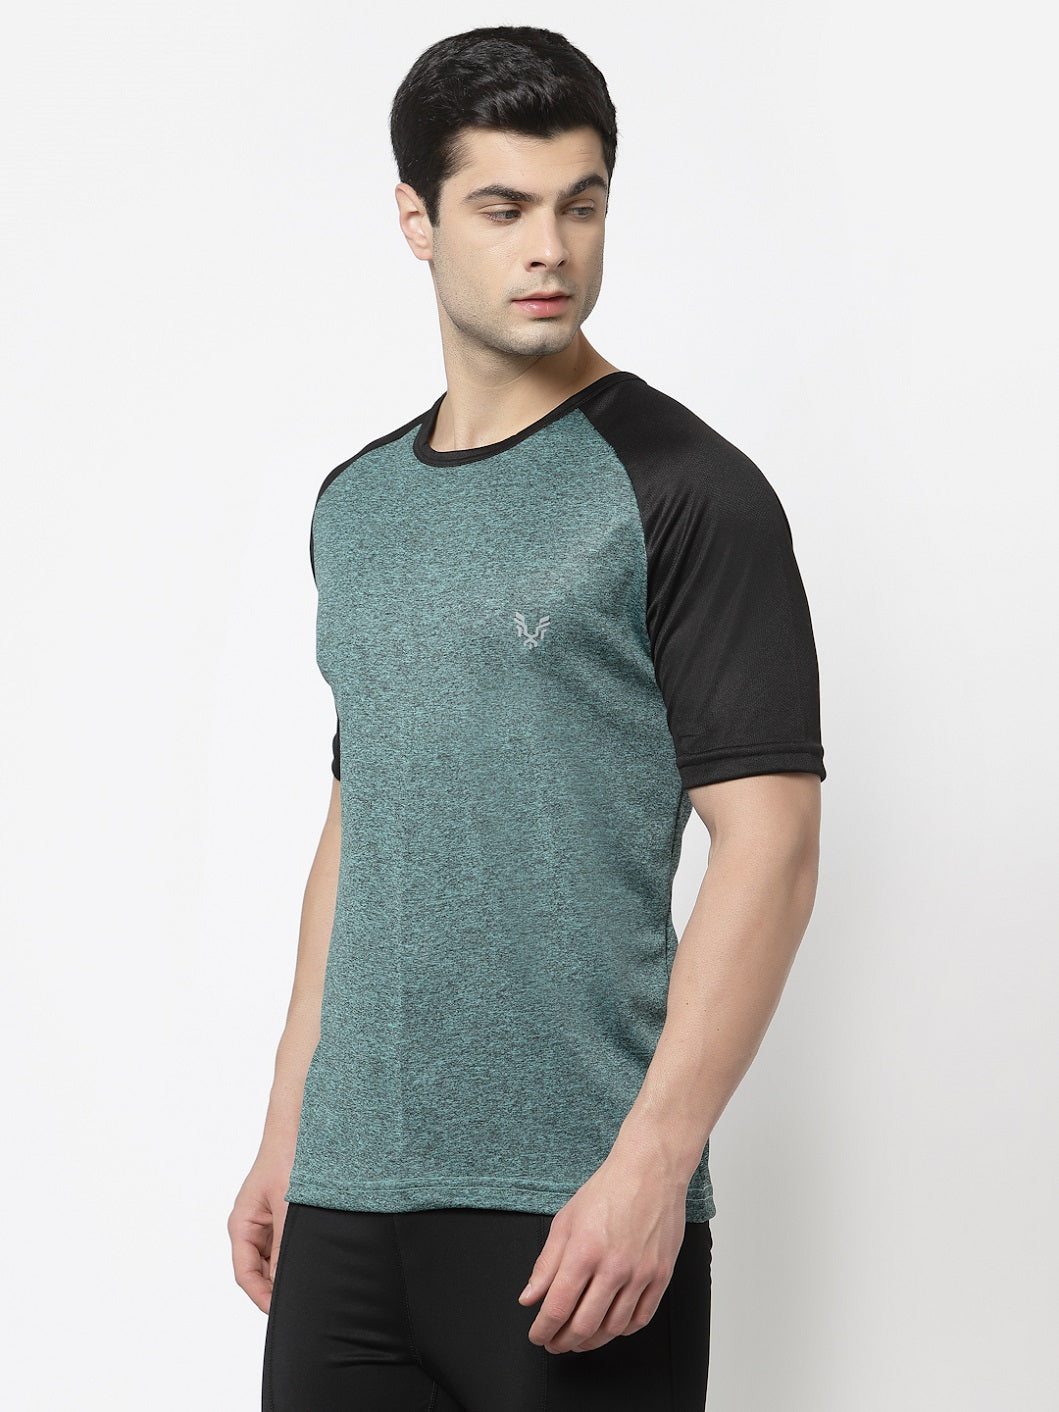 UZARUS Men's Gym Sports Half Sleeves Regular Fit T-Shirt